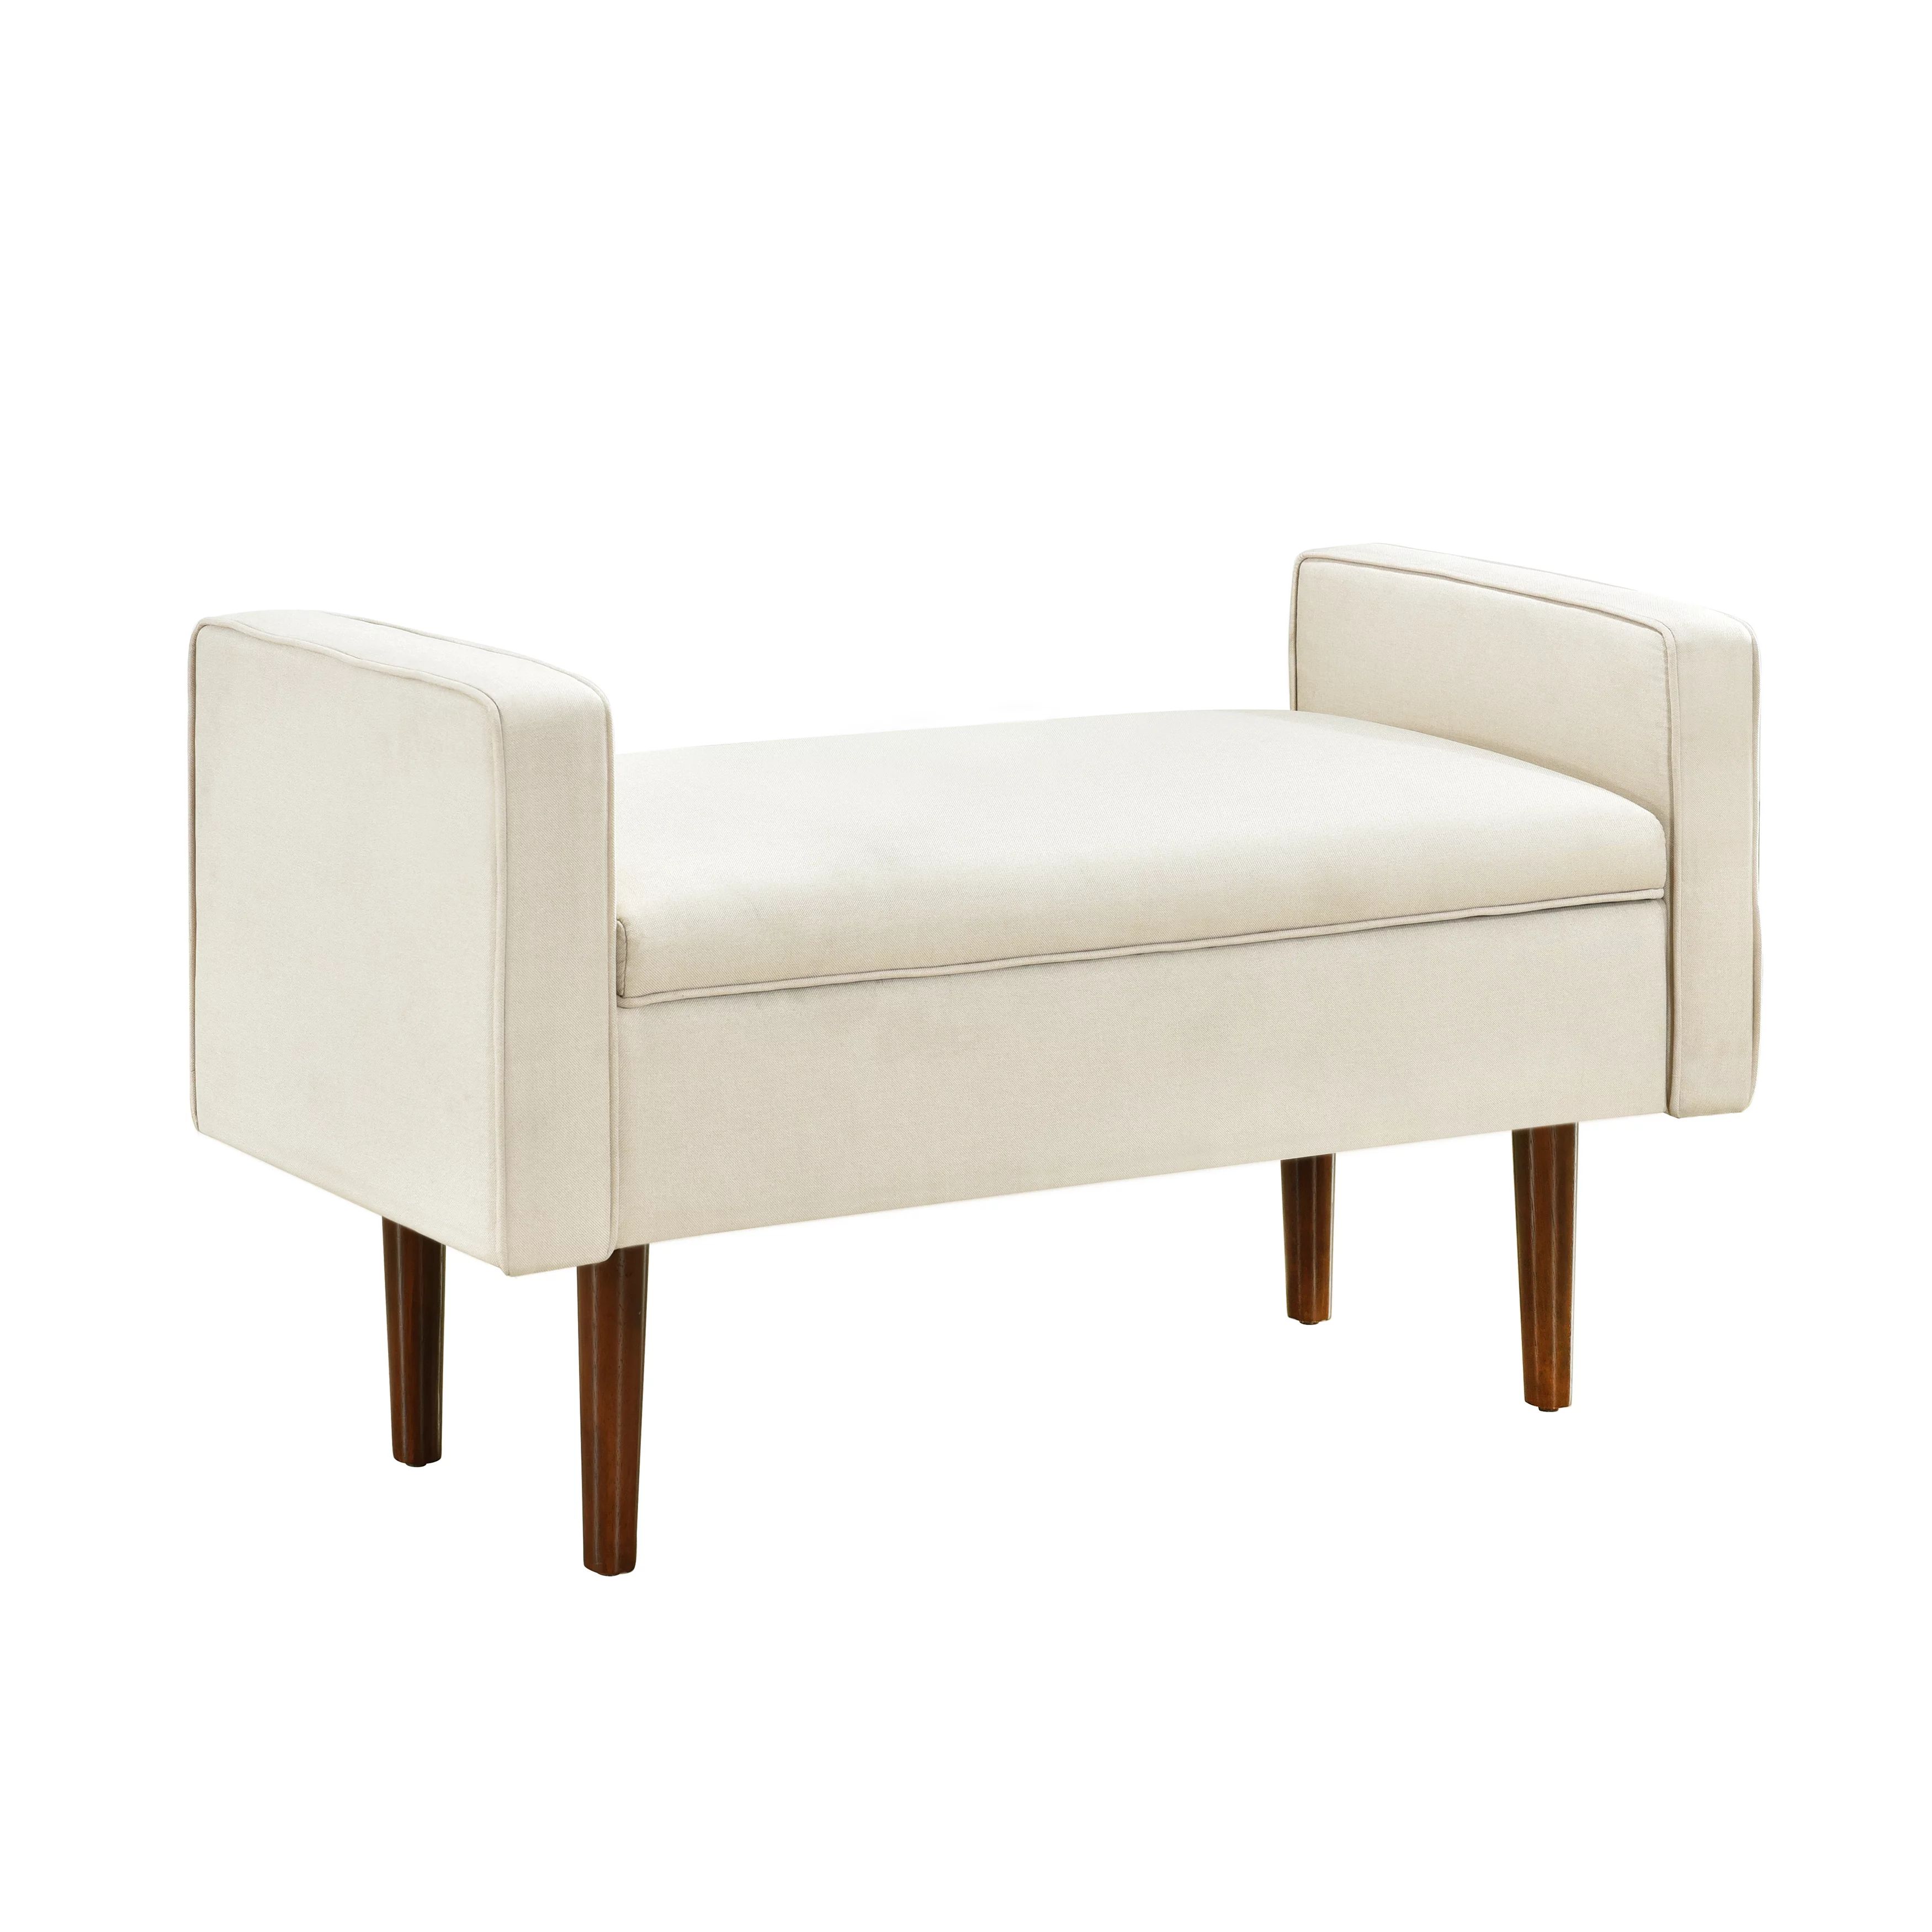 HomeFare Mid Century Modern Upholstered Storage Bench Cream - Walmart.com | Walmart (US)